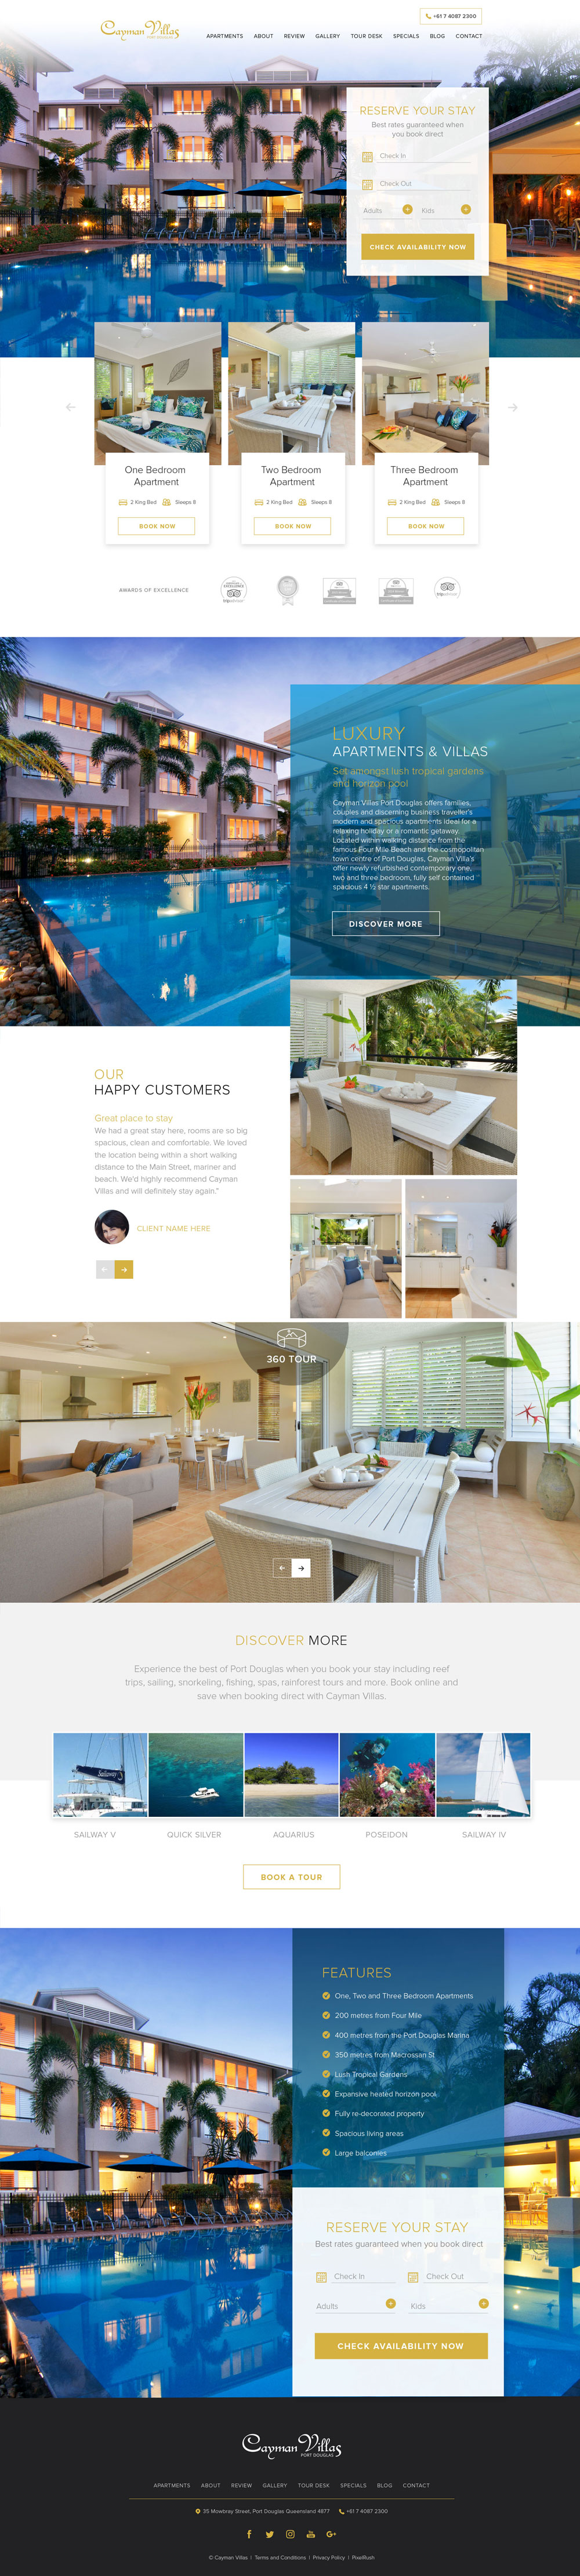 Cayman Villas Hotel Web Design